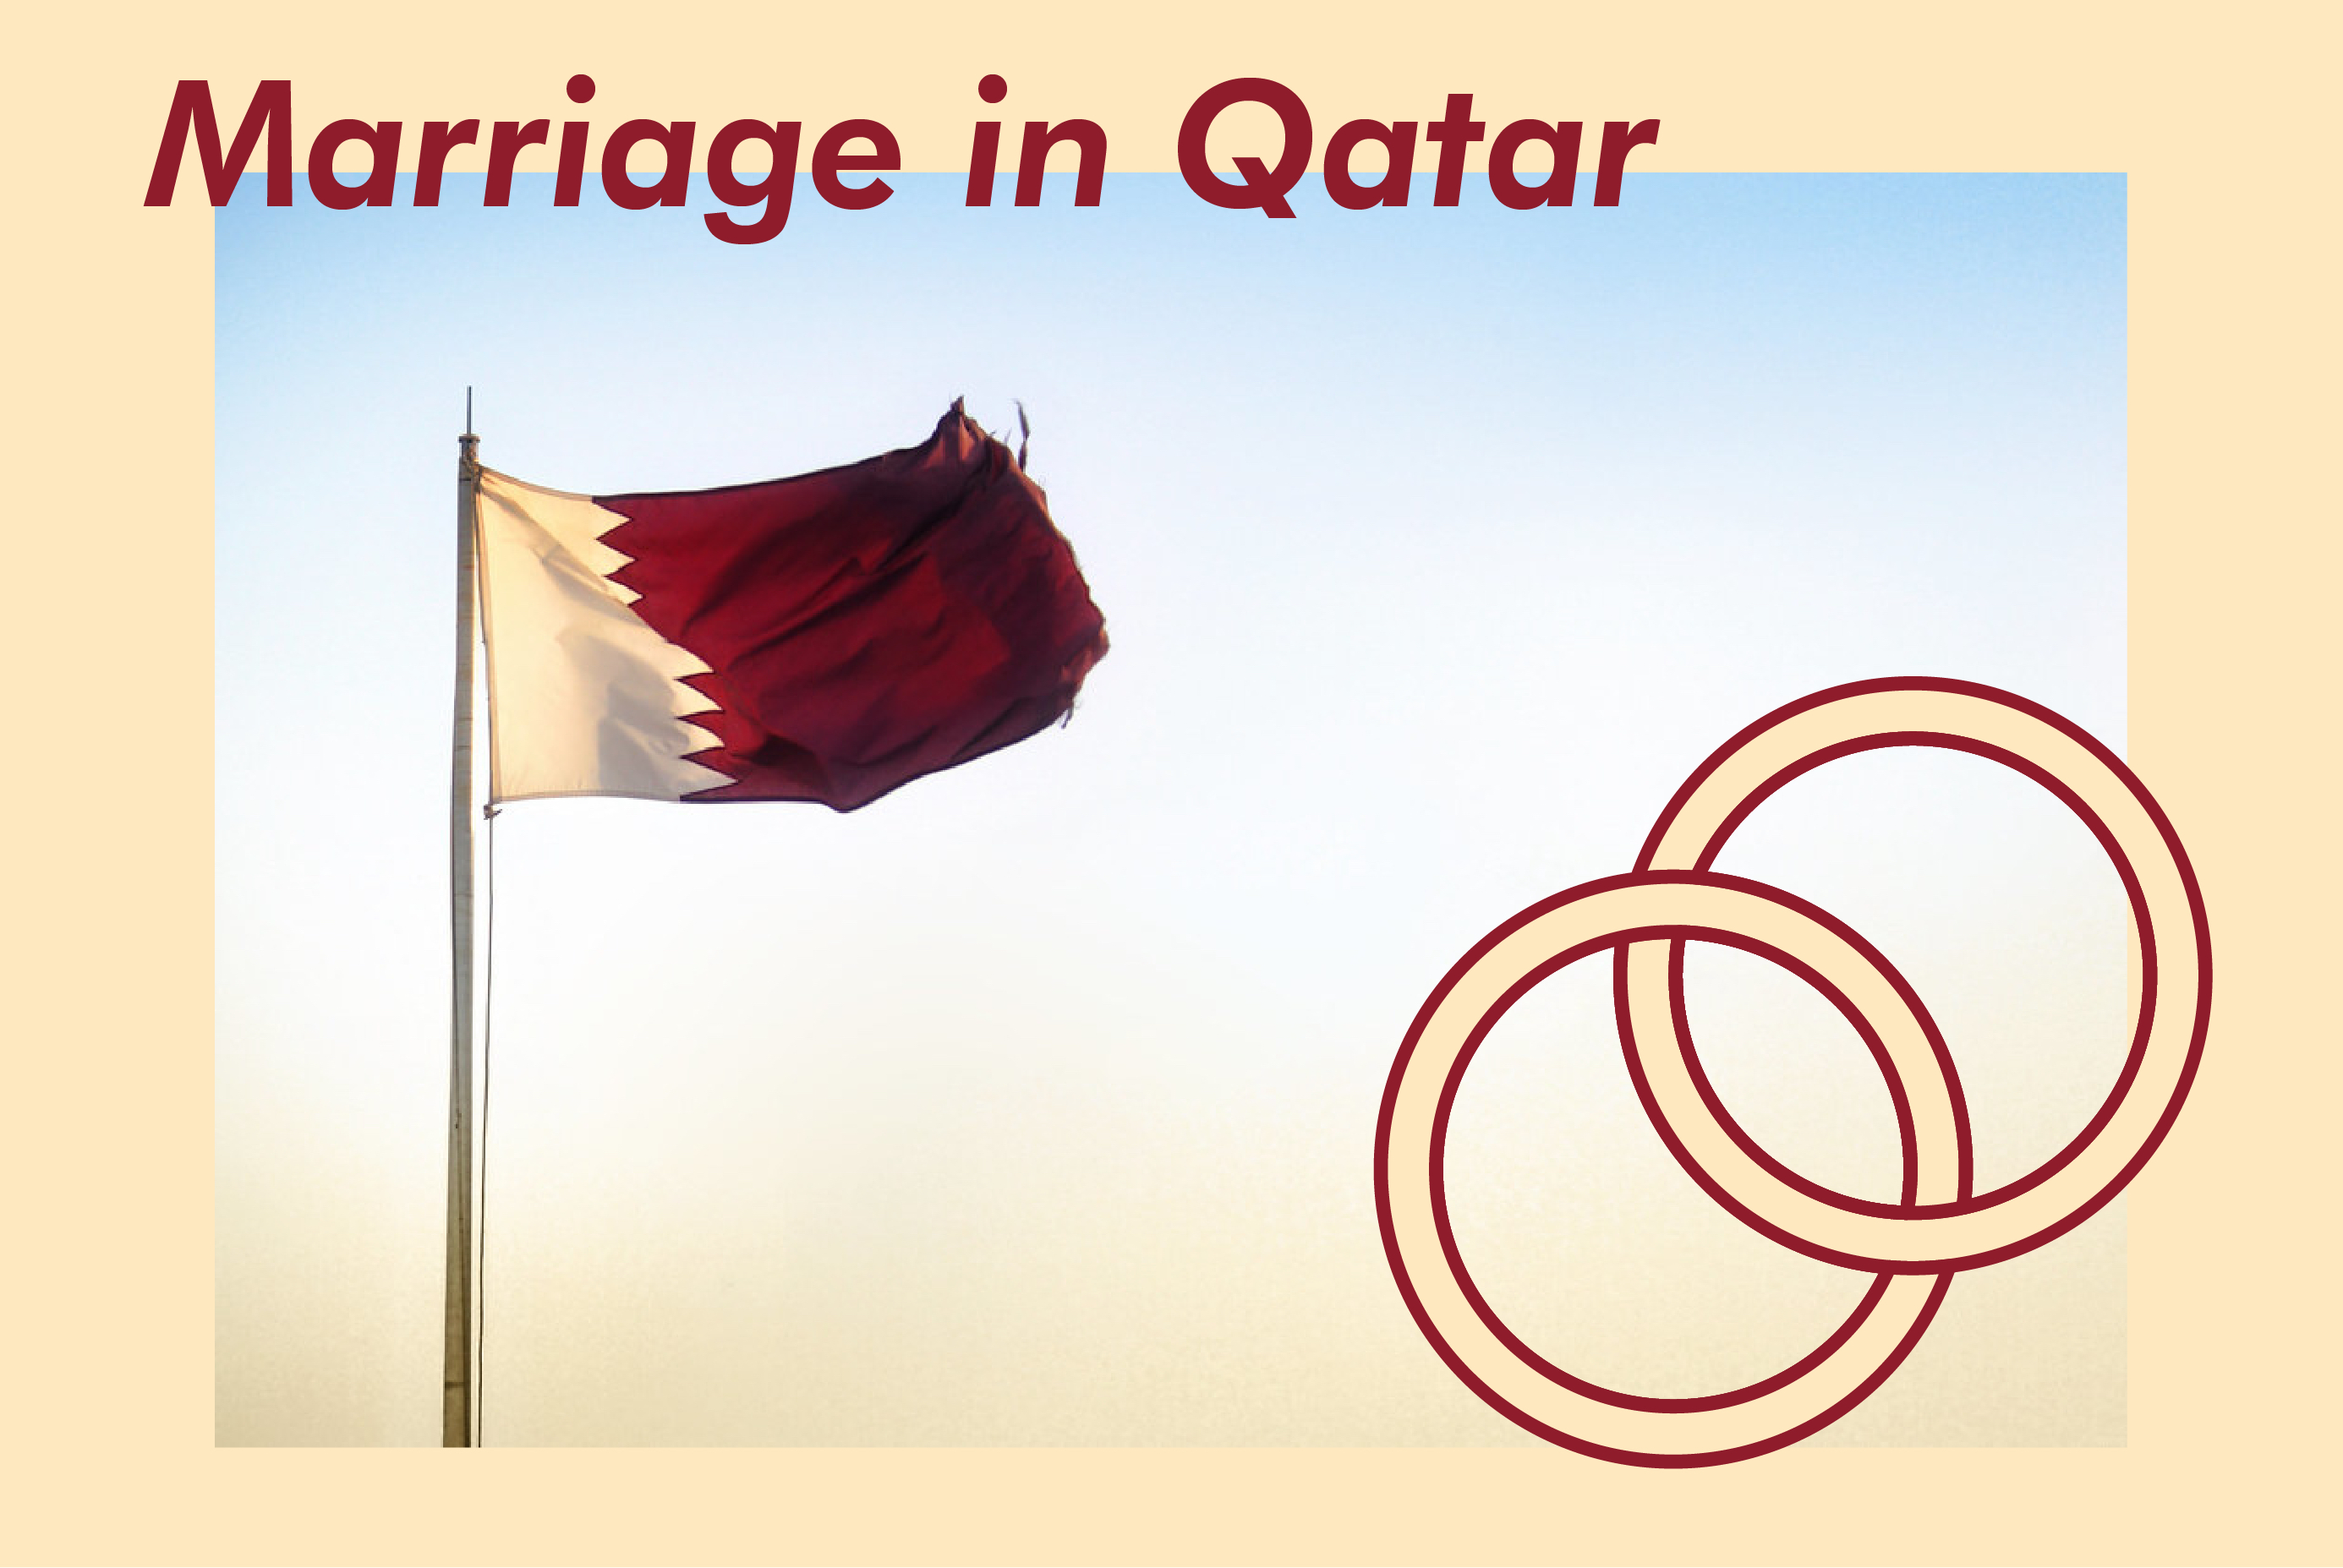 Marriage in Qatar: An Intimate Choice or A Sociopolitical Duty?